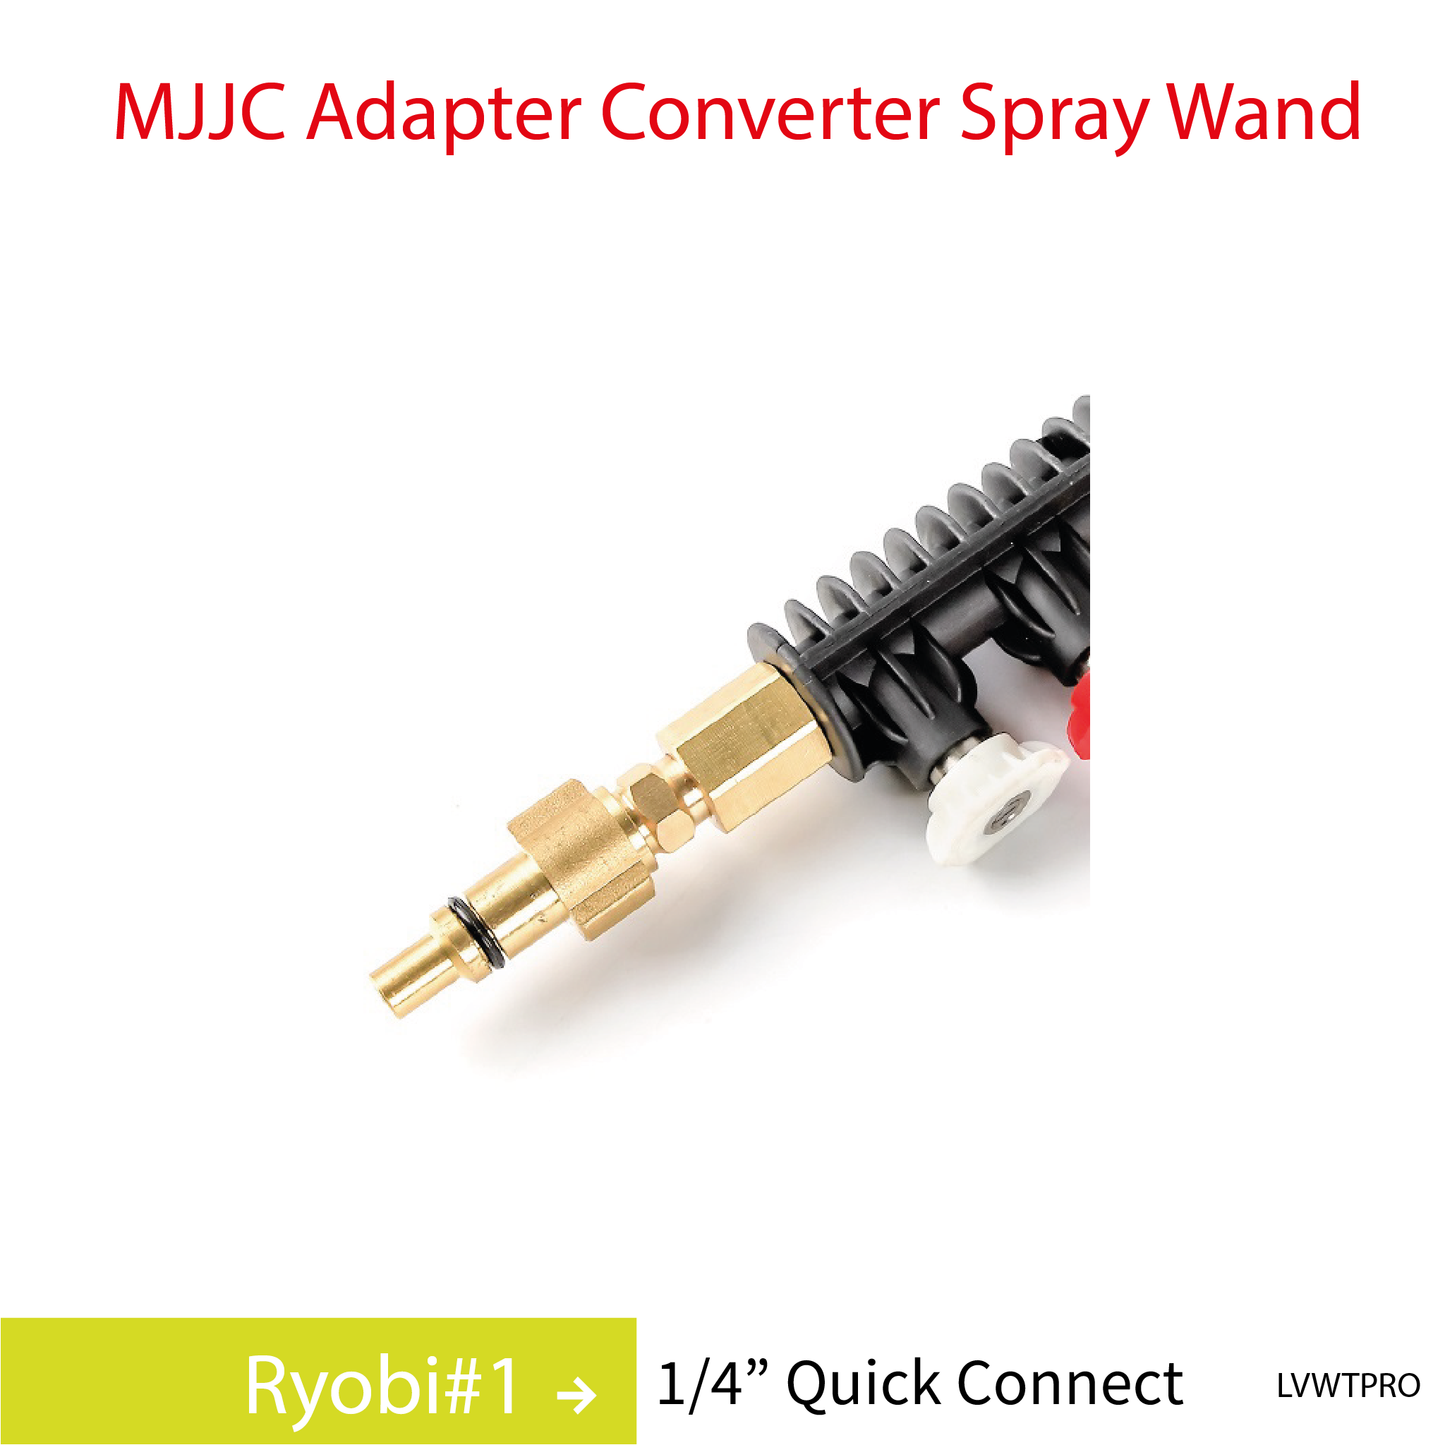 Ryobi#1 MJJC Adapter Conversion Converter pressure washer Spray Wand with 5 spray tips